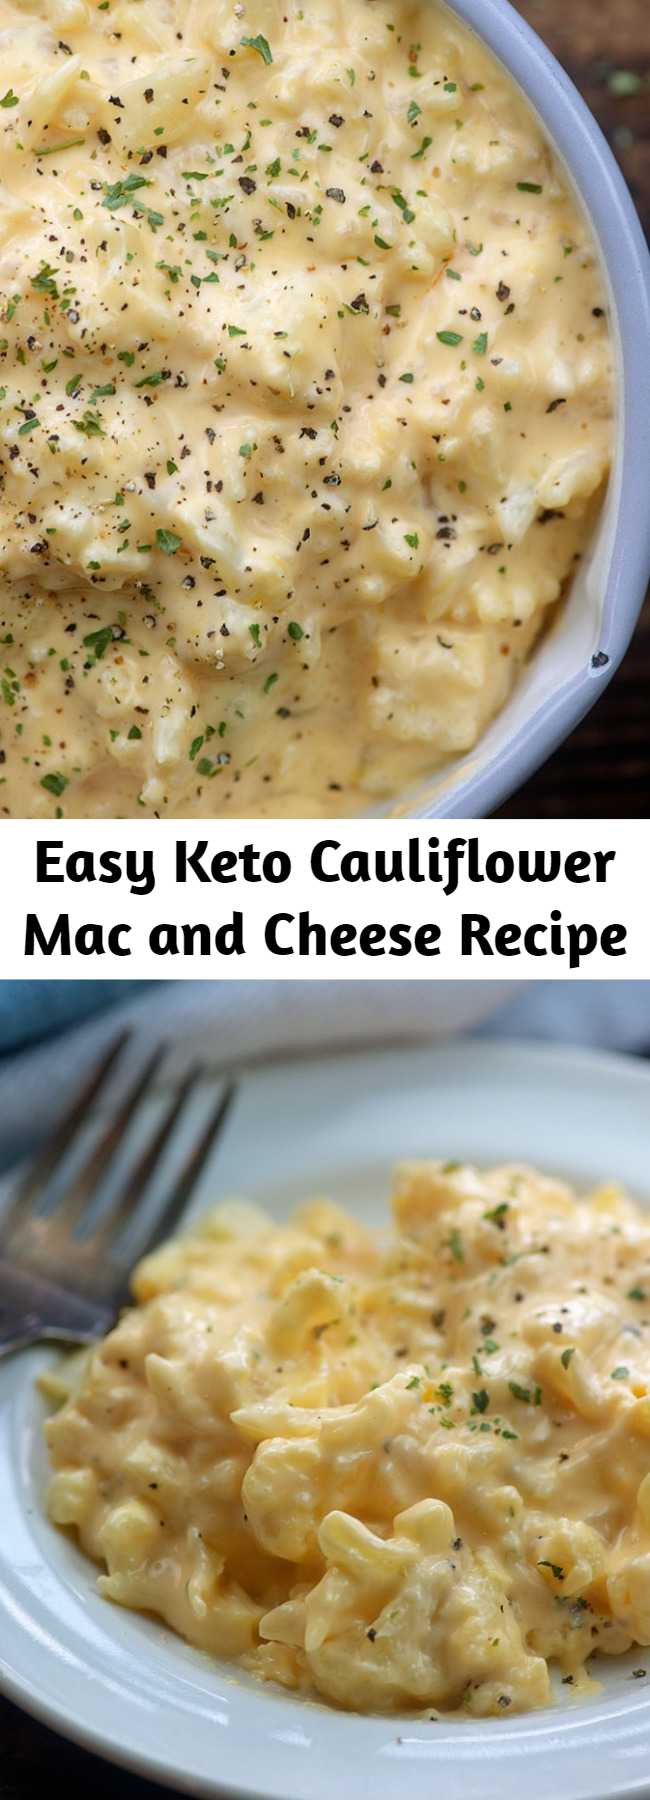 Easy Keto Cauliflower Mac and Cheese Recipe – Mom Secret Ingrediets